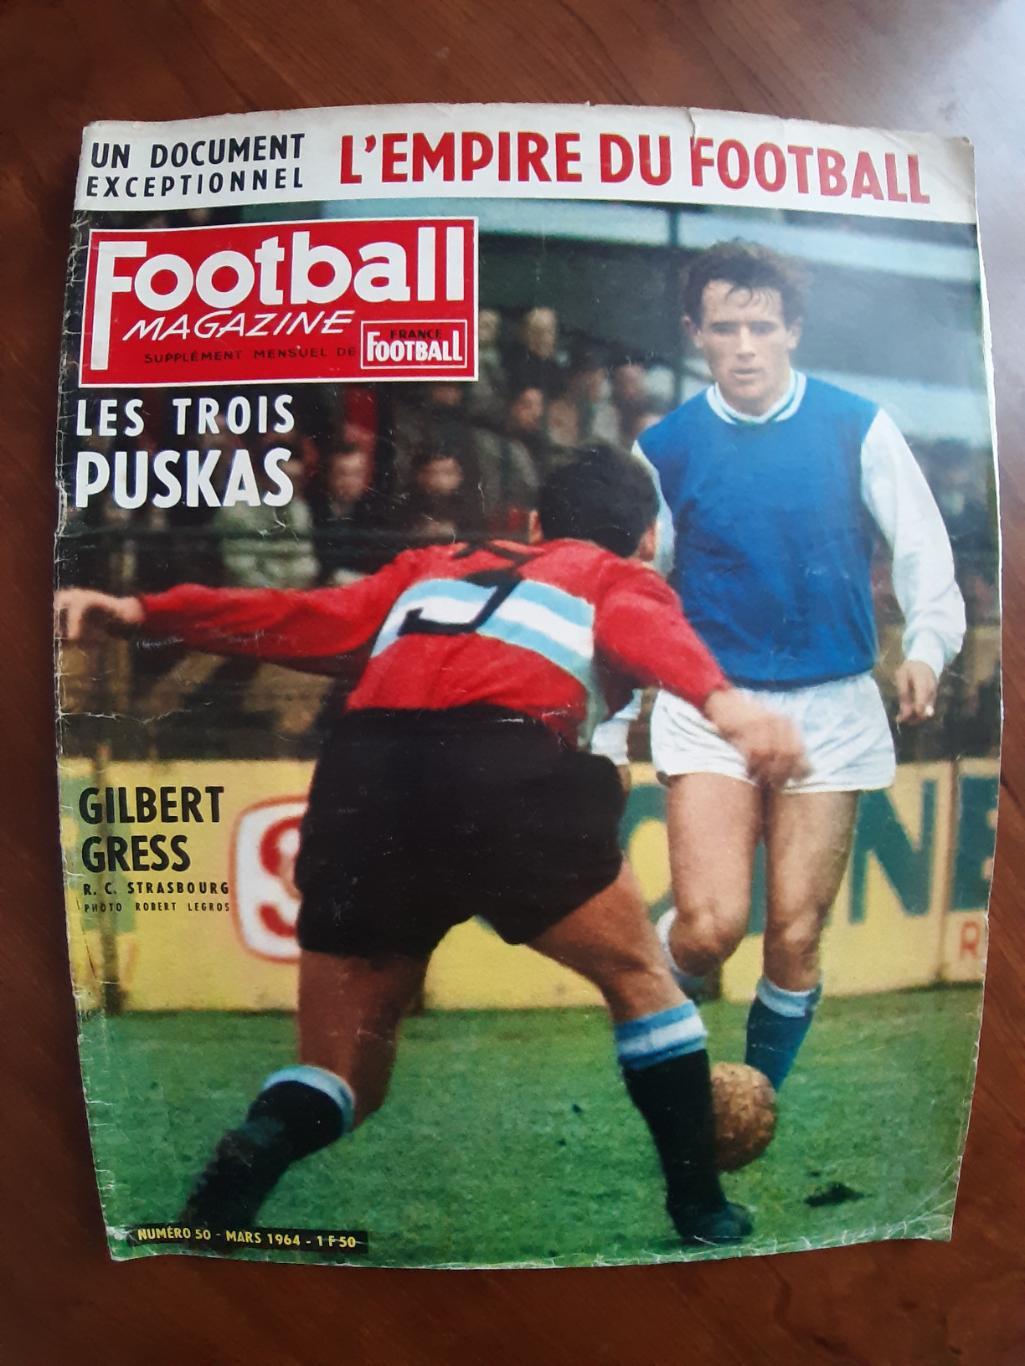 Football Magazine1964